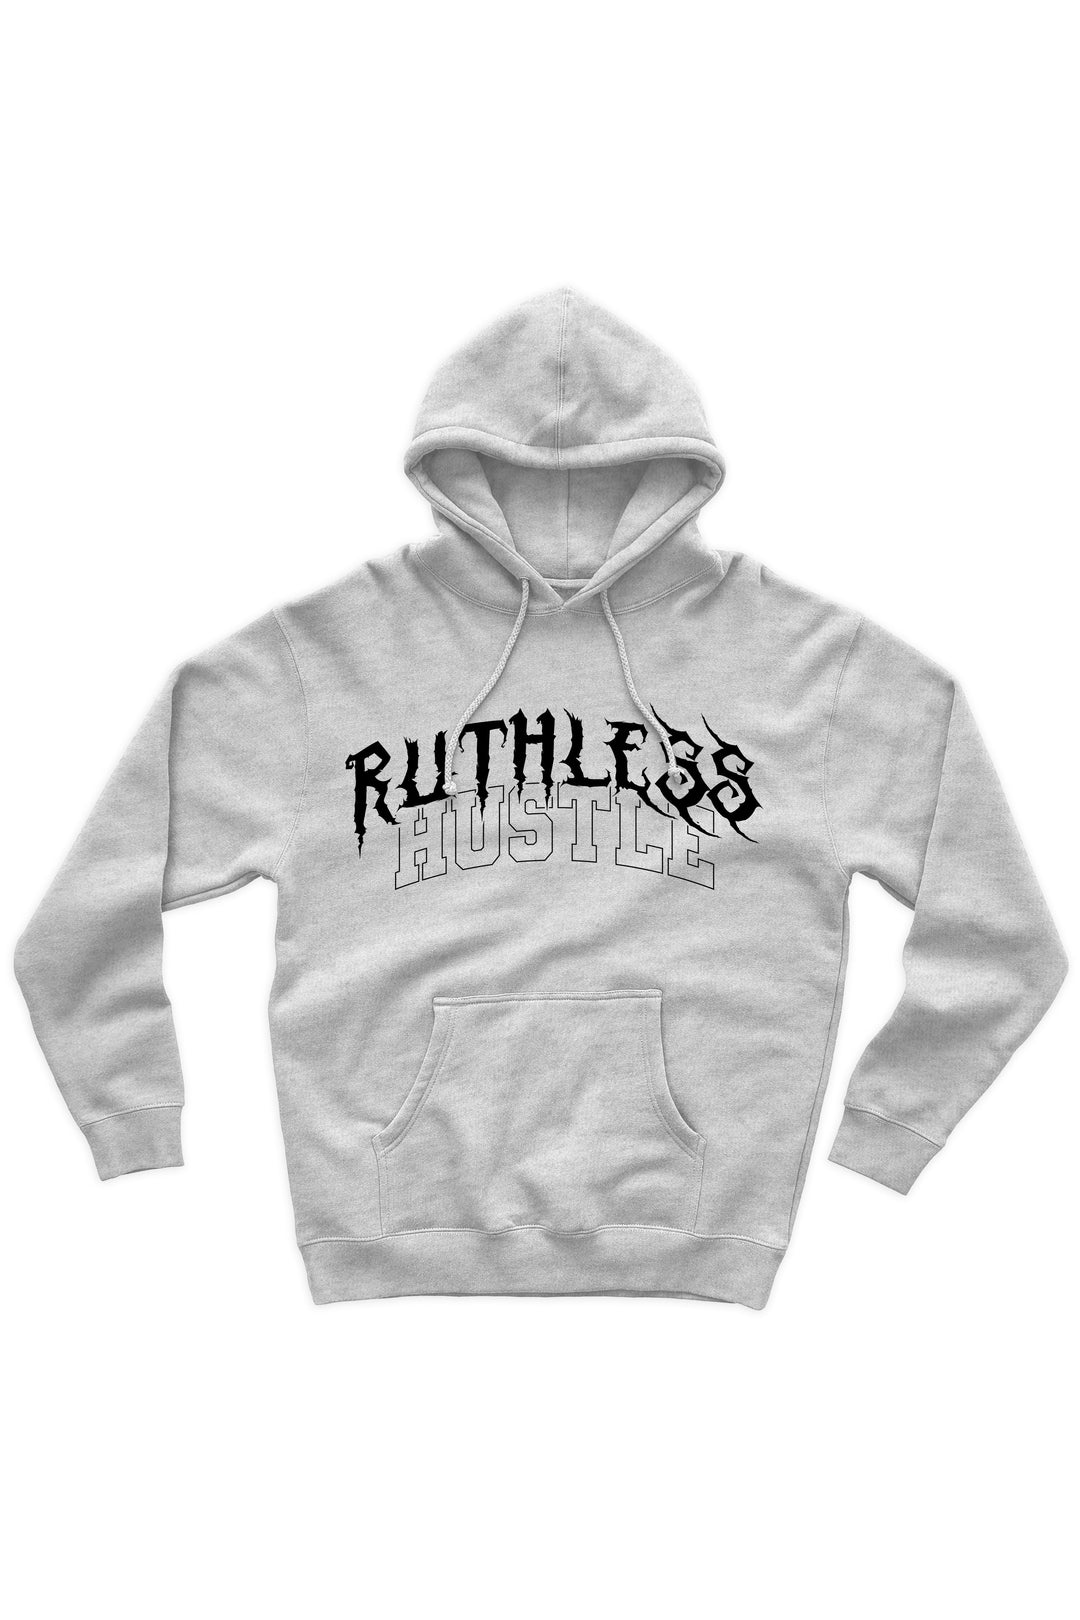 Ruthless Hustle Hoodie (Black Logo) - Zamage